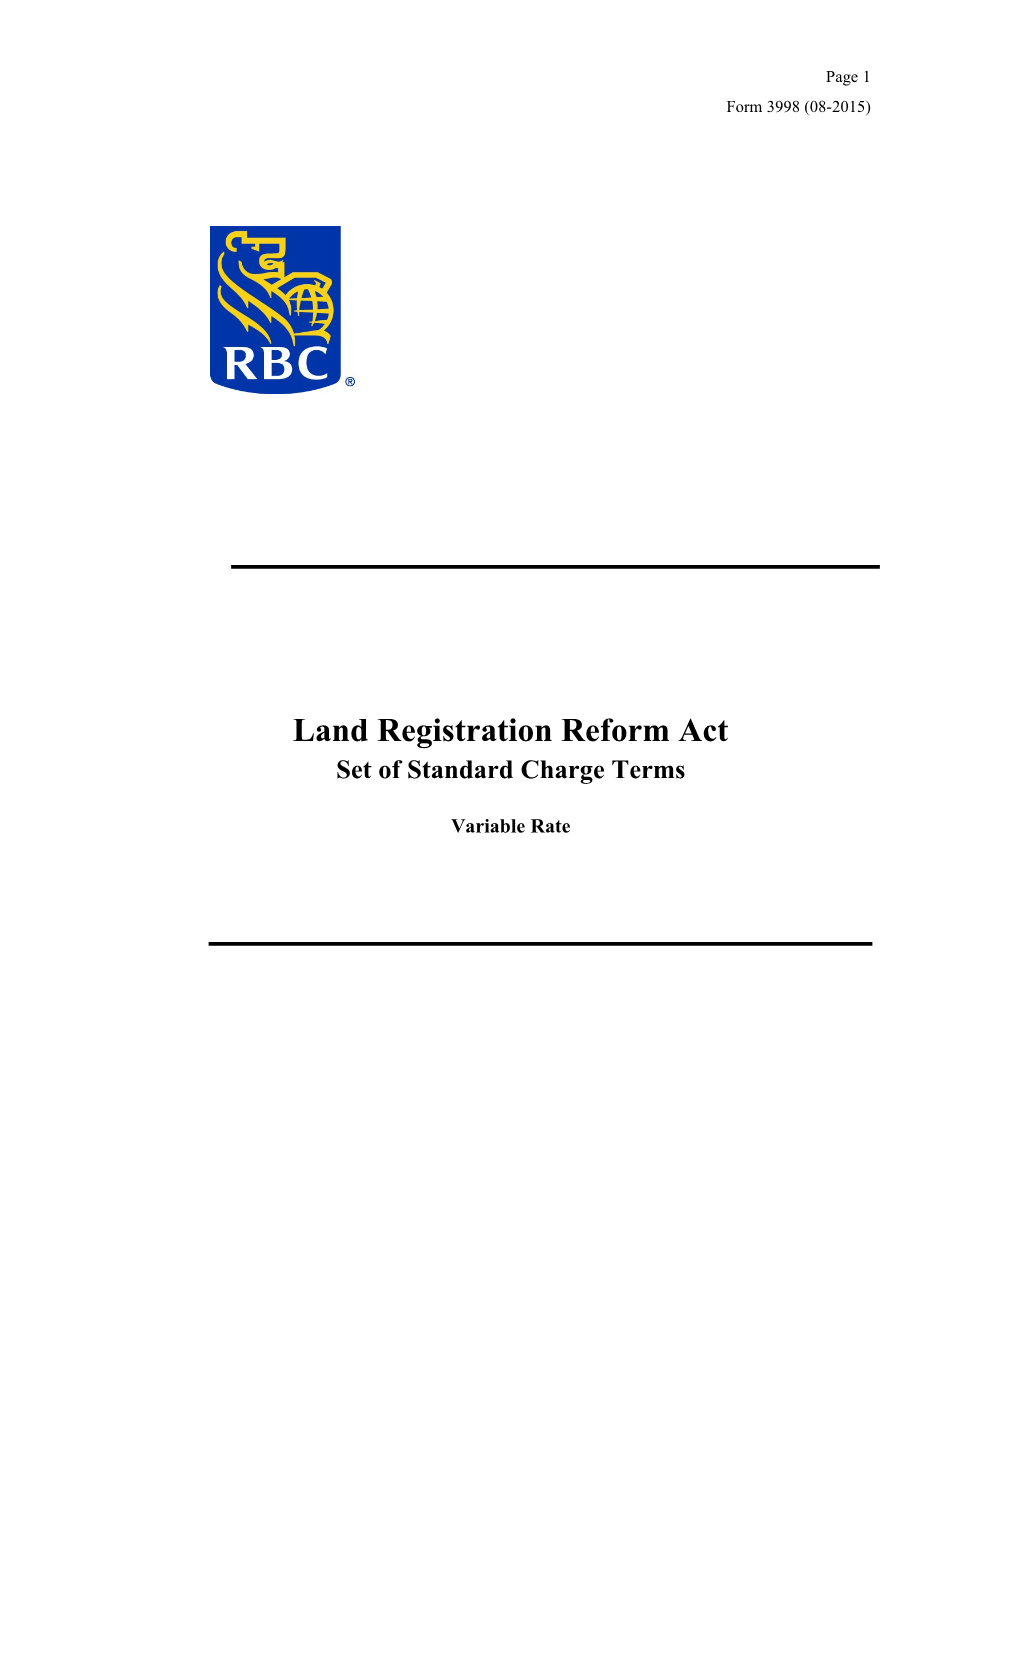 Land Registration Reform Act